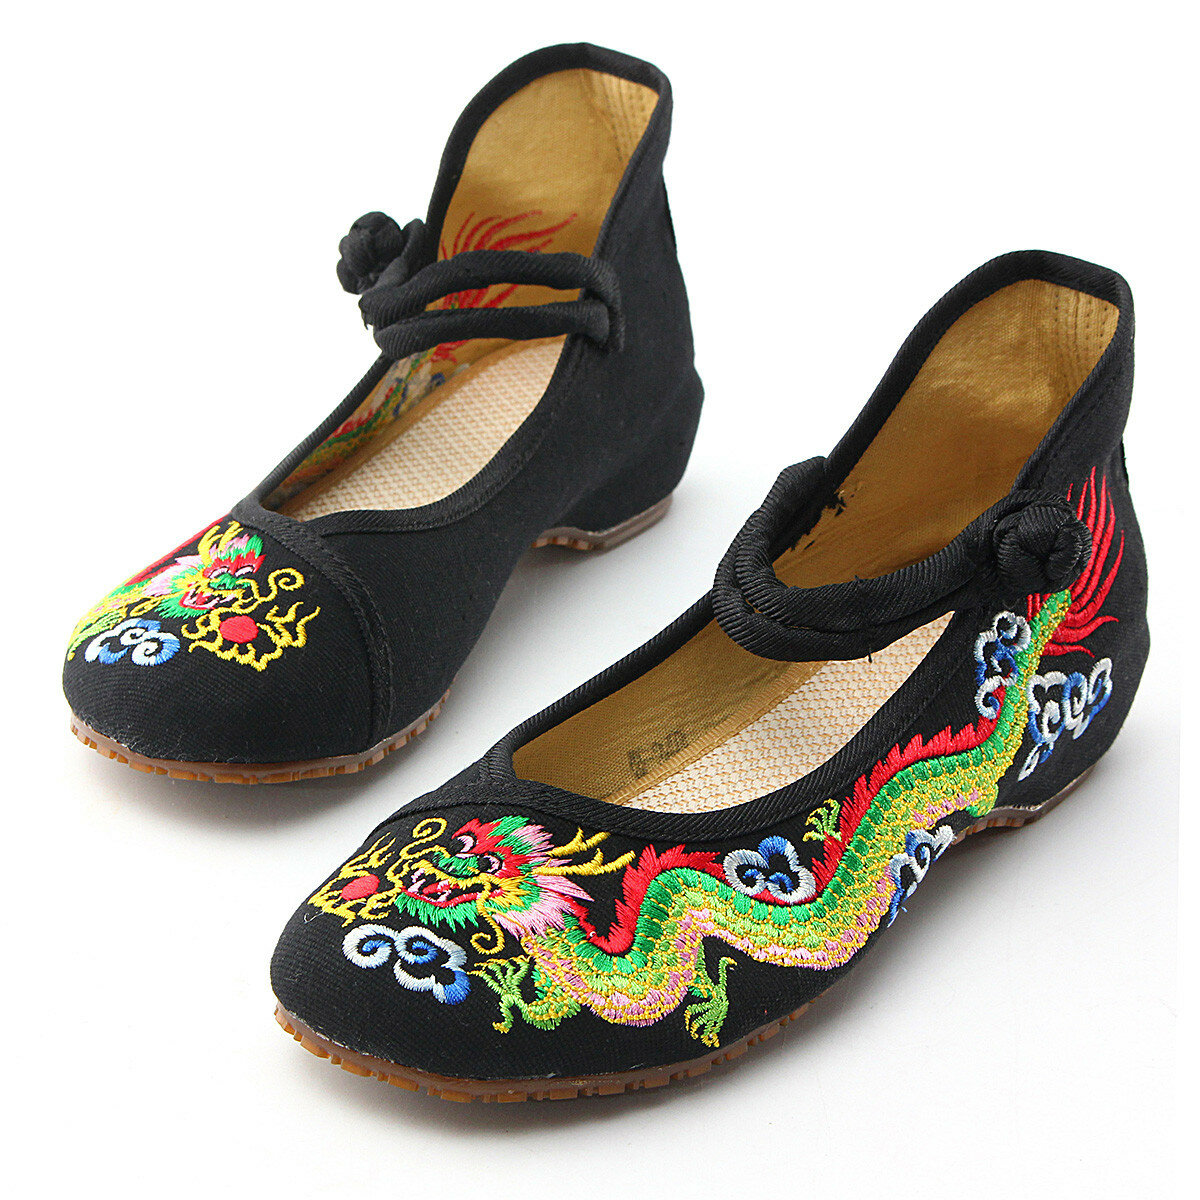 Handgemaakte zomerse comfortabele canvas slippers met Chinese draak borduursel voor dames